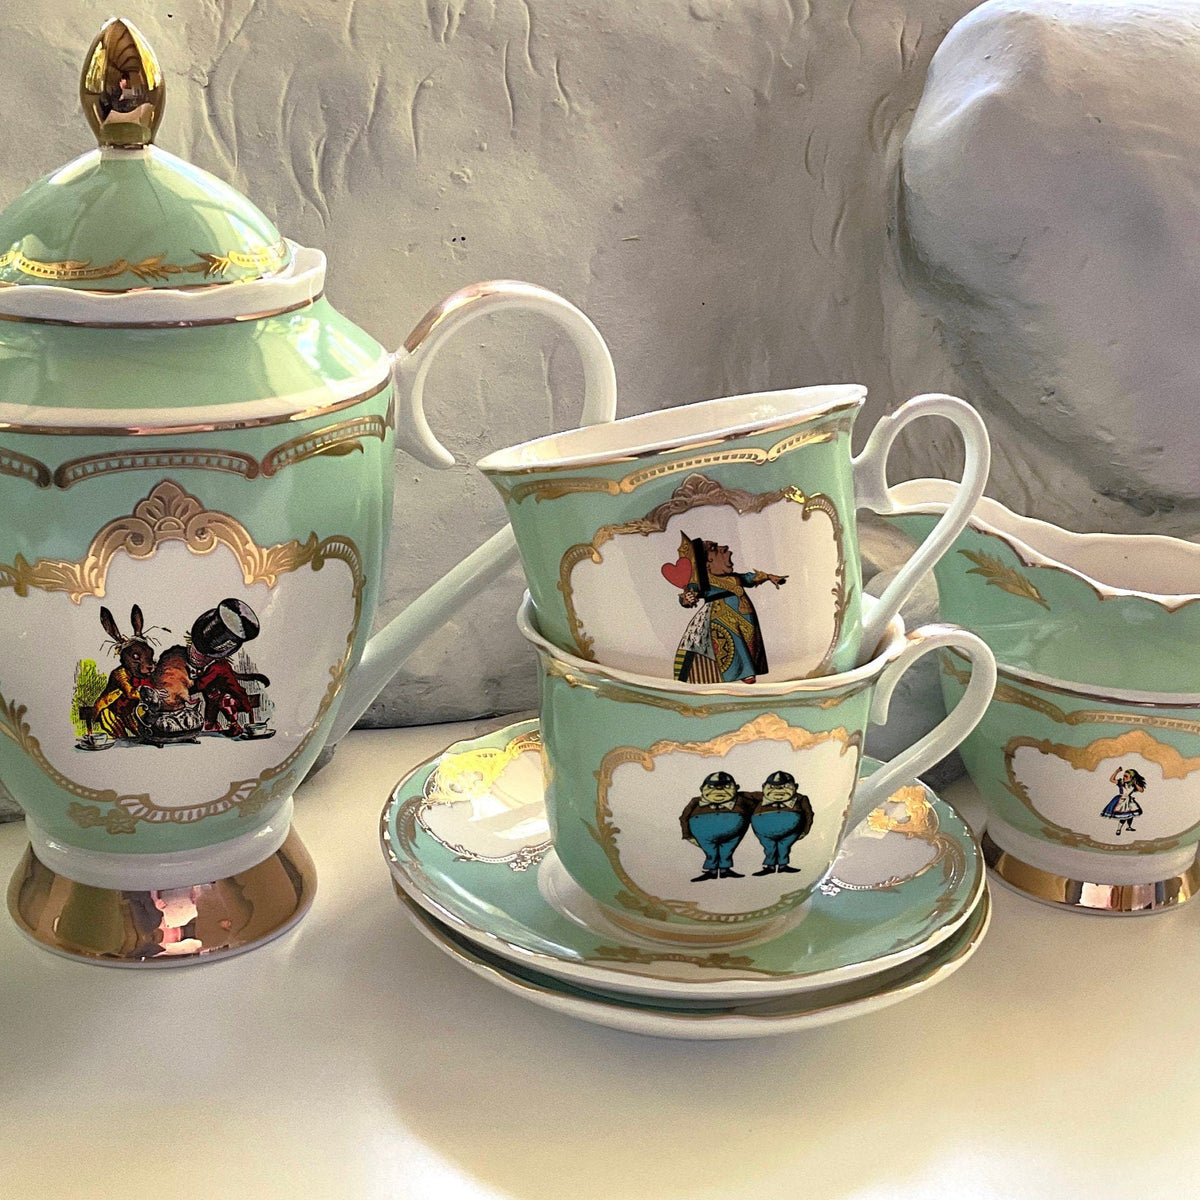 15.5 cm Details about   V&A Alice in Wonderland Stainless Steel Teaspoons Porcelain Handles 